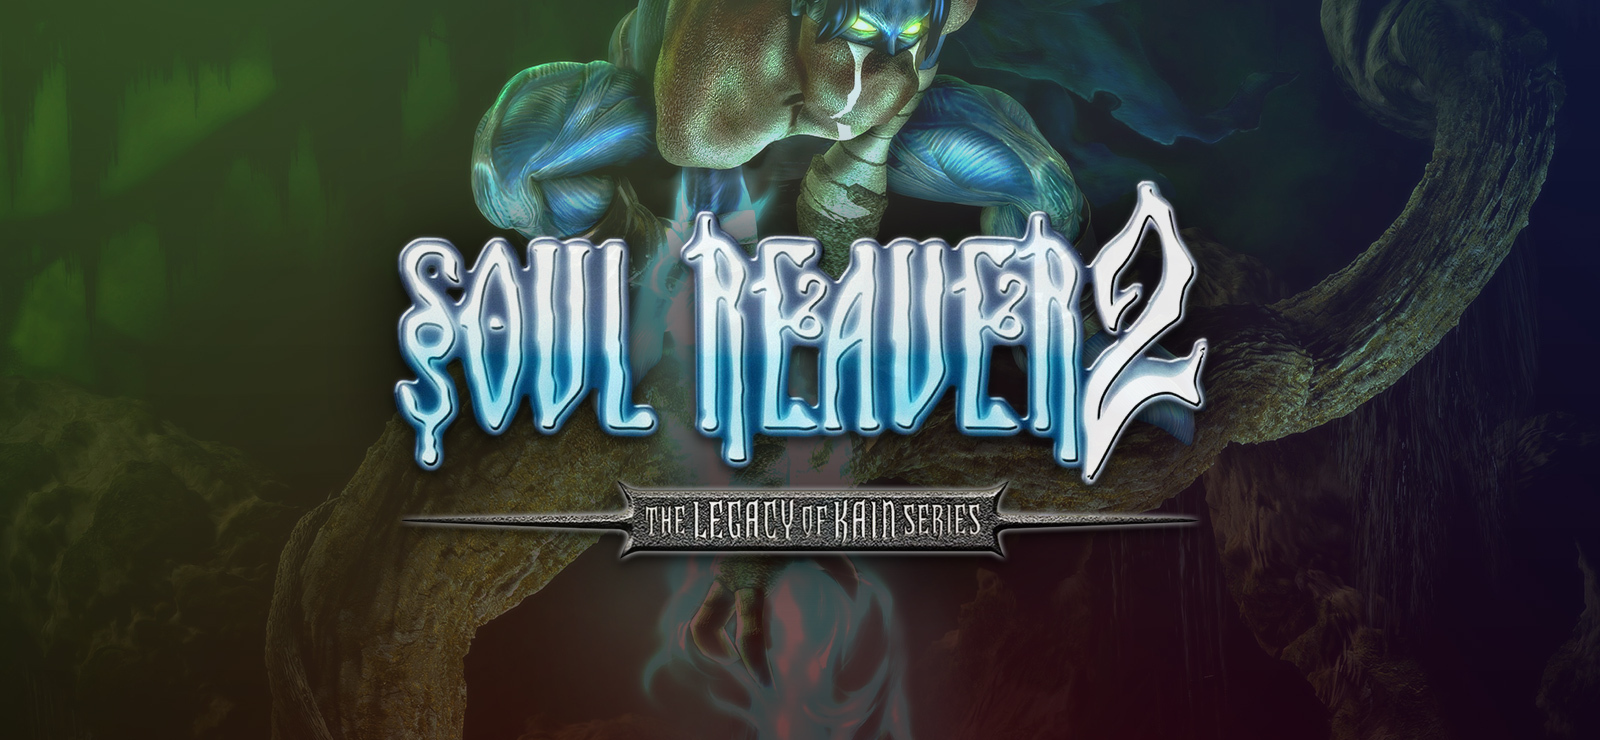 Legacy of Kain: Soul Reaver 2 Free Download (v1.02) » GOG Unlocked